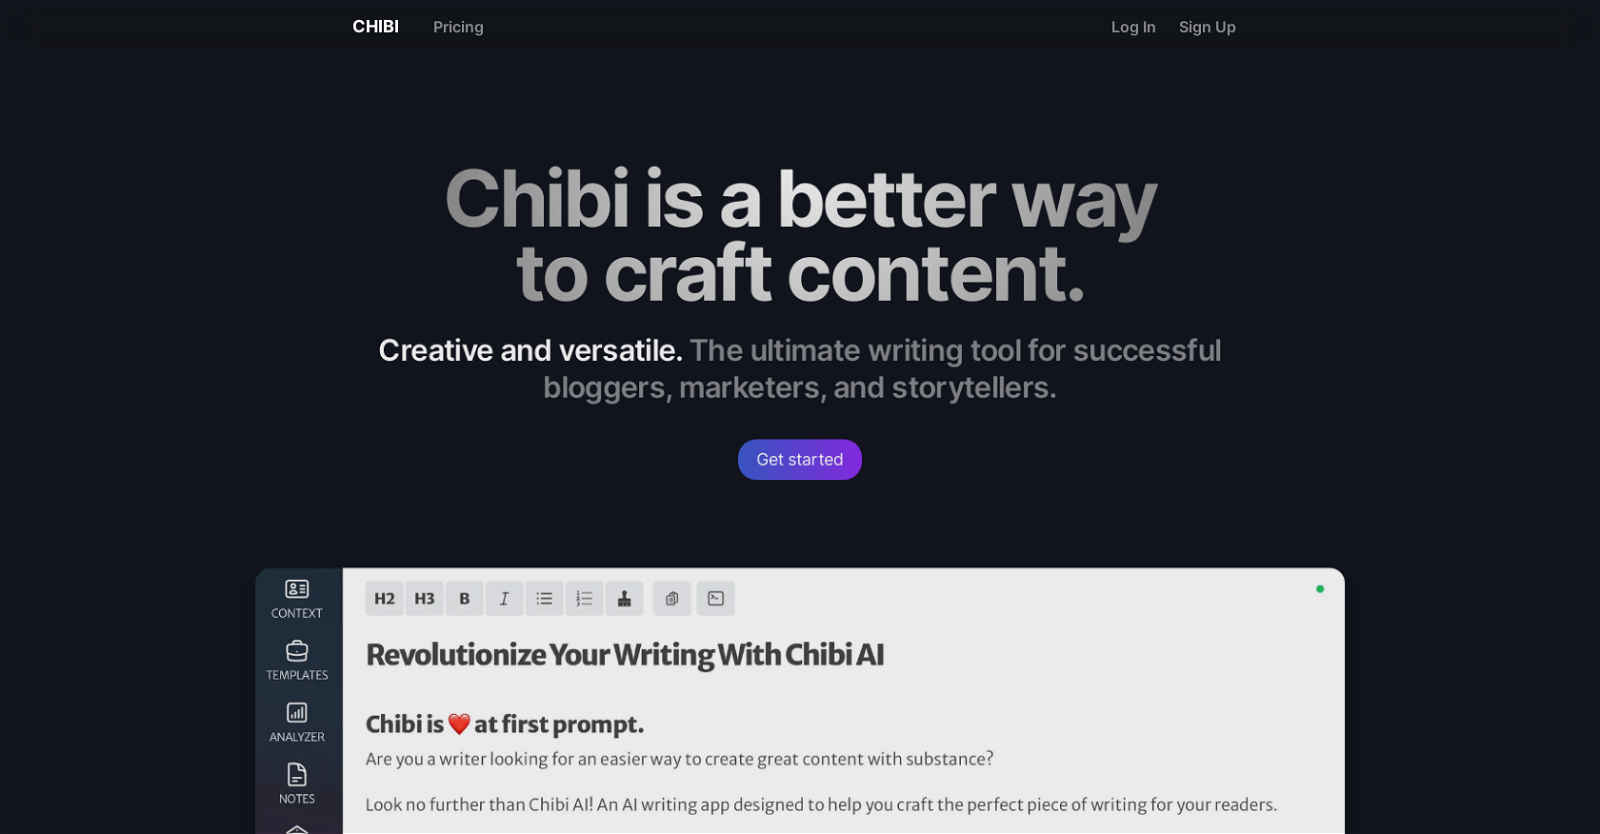 ChibiAI website